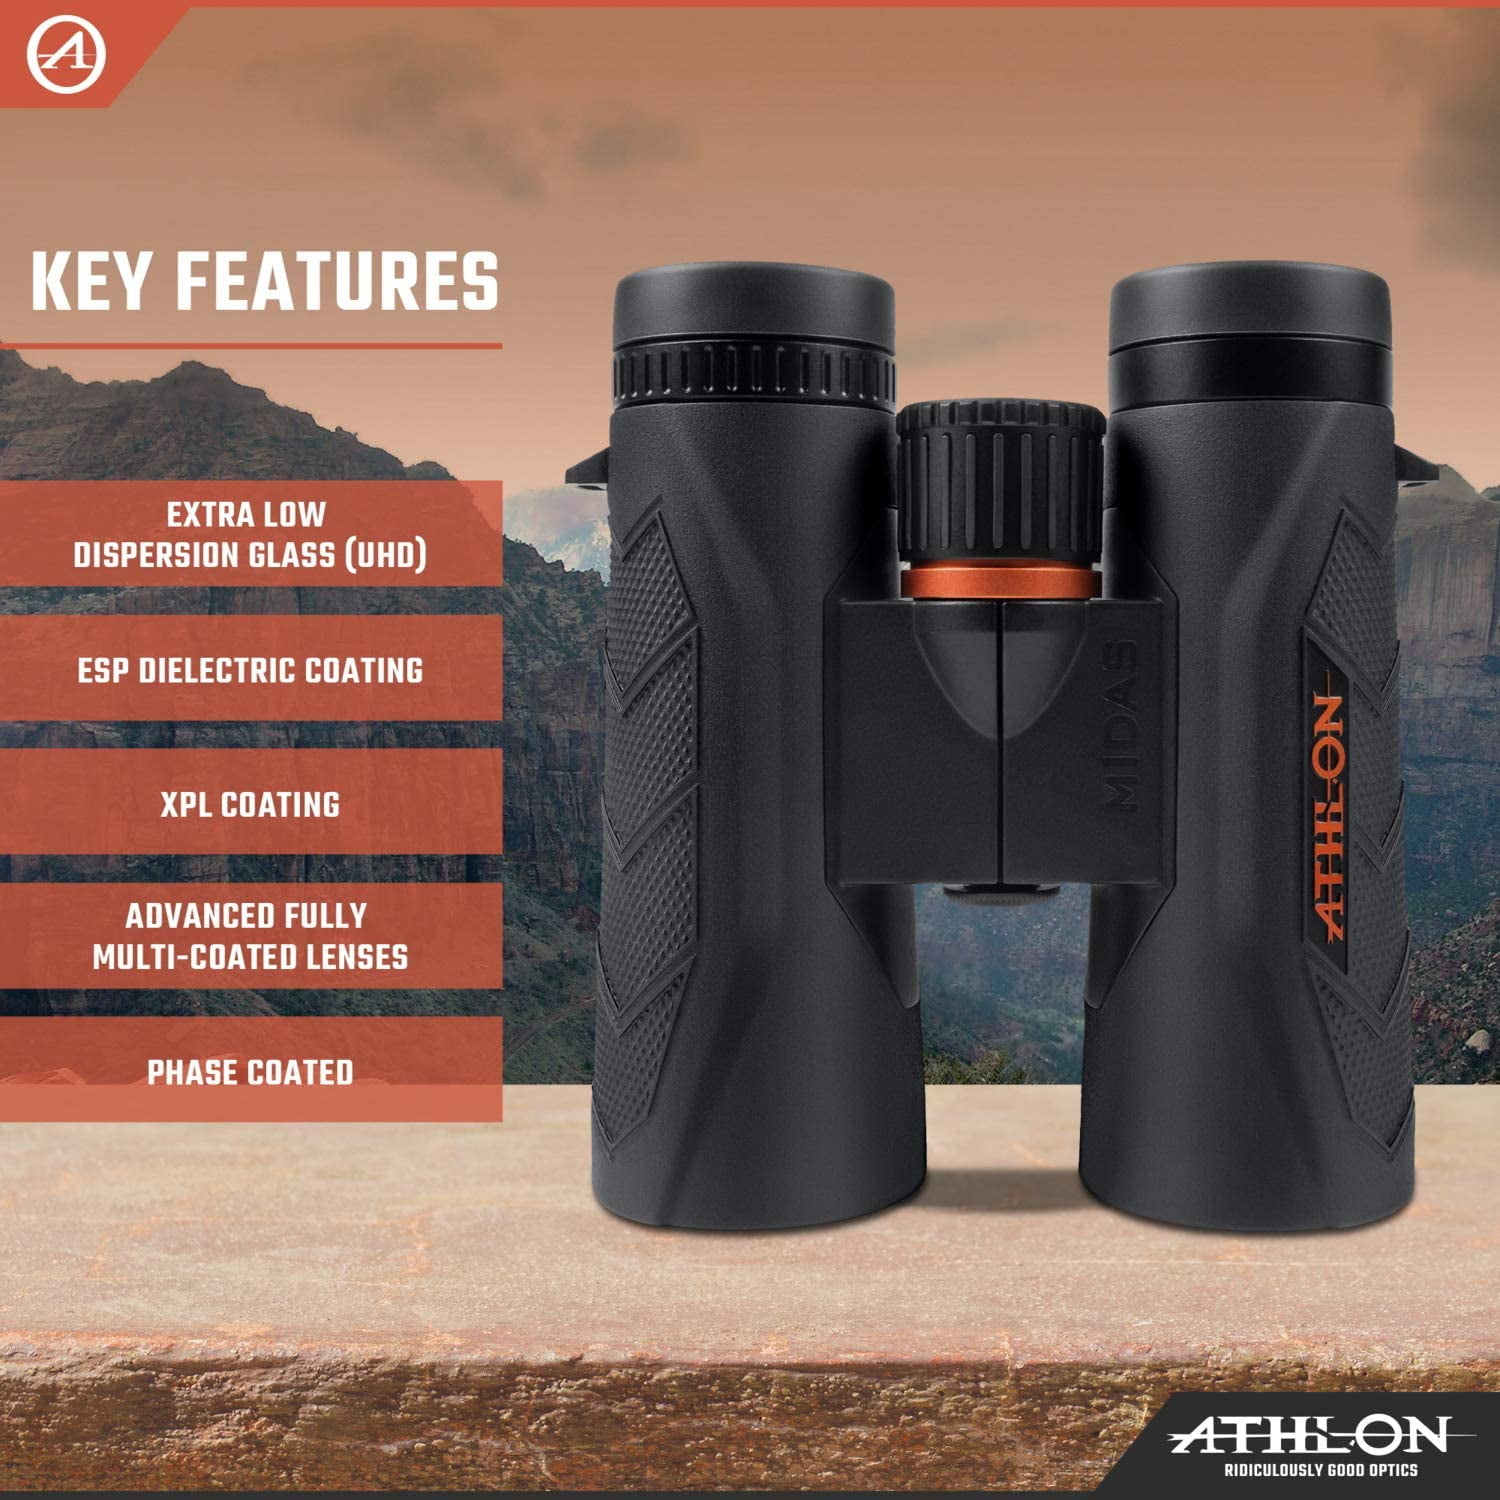 Athlon Optics Midas G2 8x42 UHD Binocular for Adult and Kids